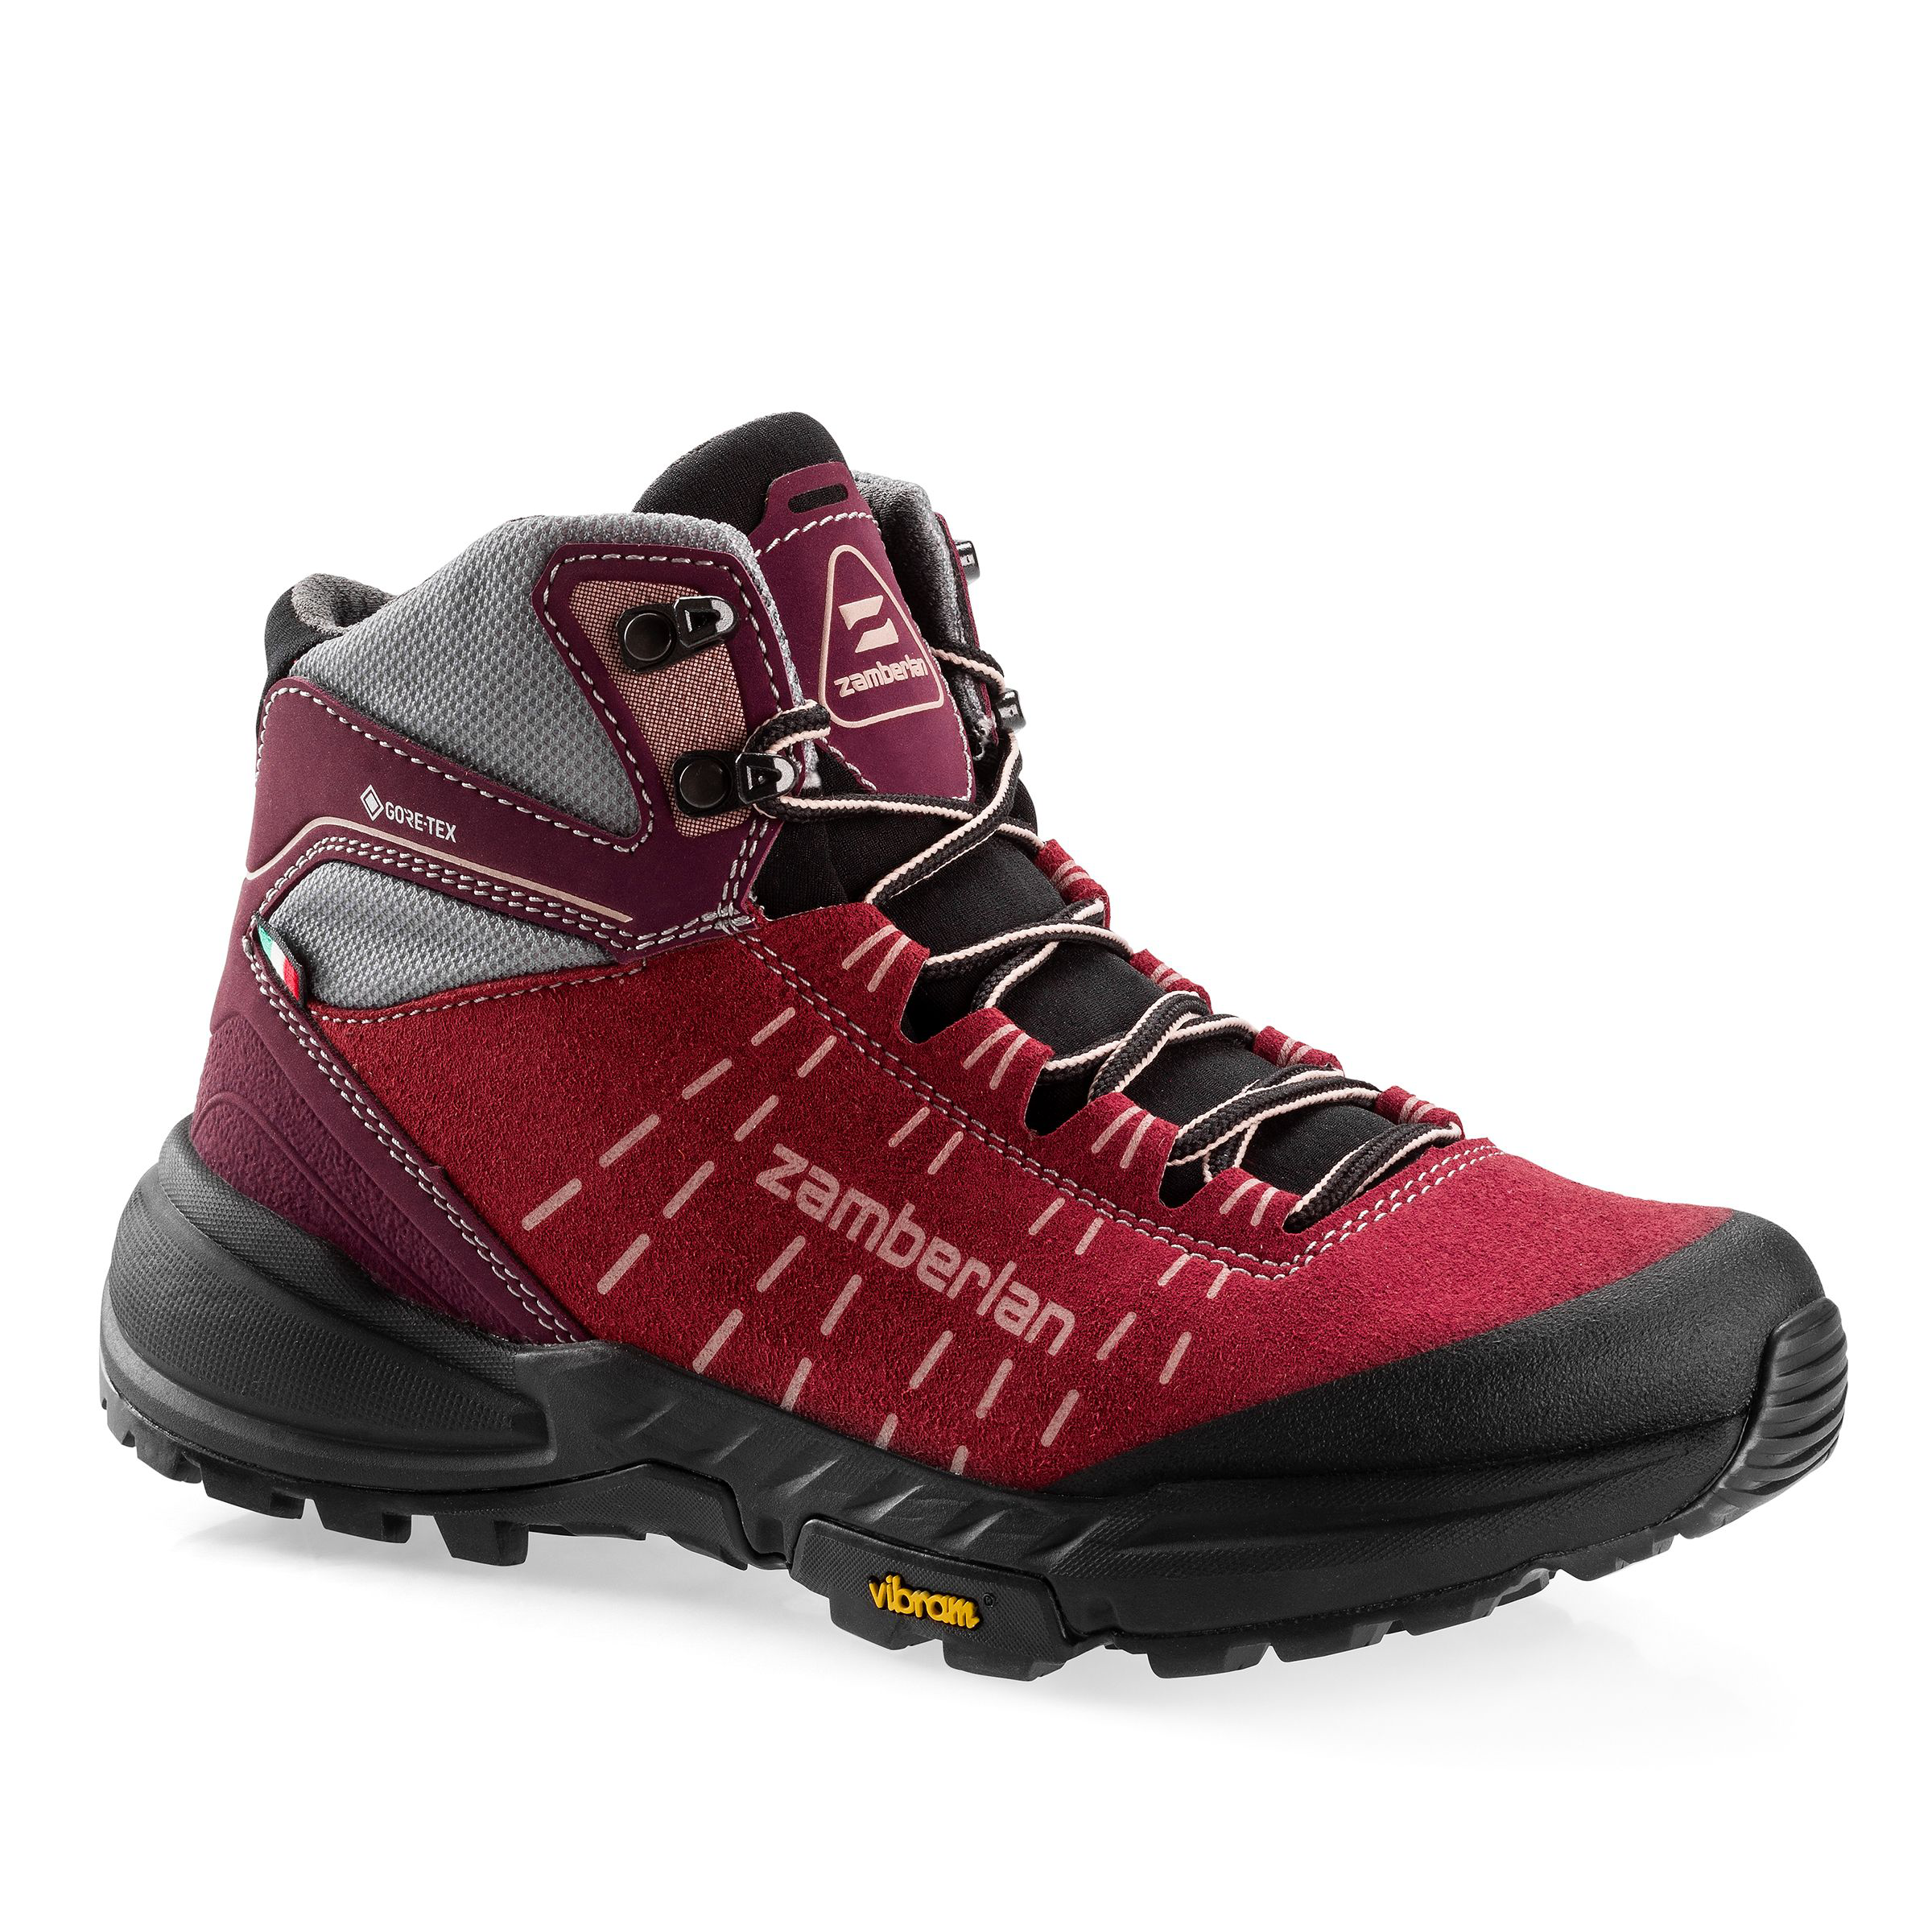 Zamberlan 334 Circe GTX Waterproof Hiking Boots for Ladies - Purple - 6.5M